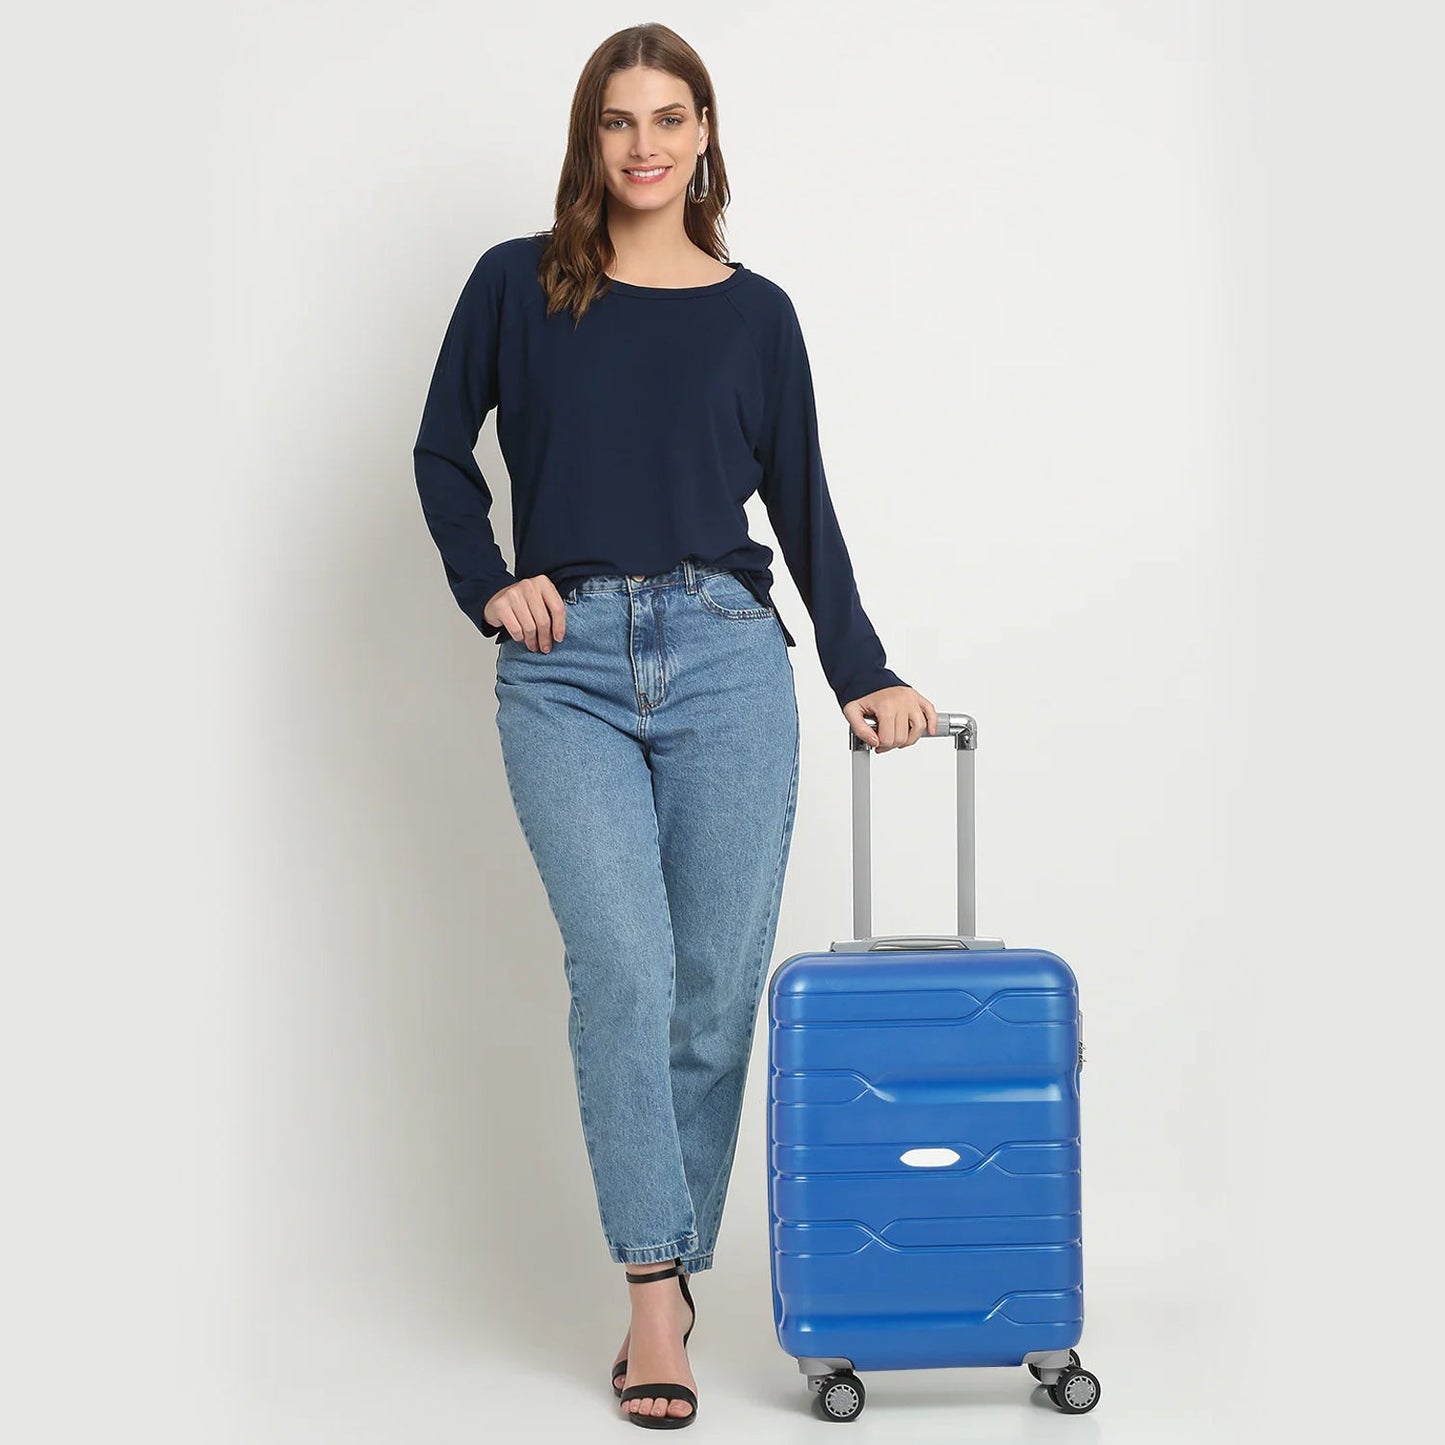 1102 Traveling Trolley Bag Set, Small , Medium & Big Suitcase Premium Quality Bag 3 Pcs Set For Traveling Use Dukandaily